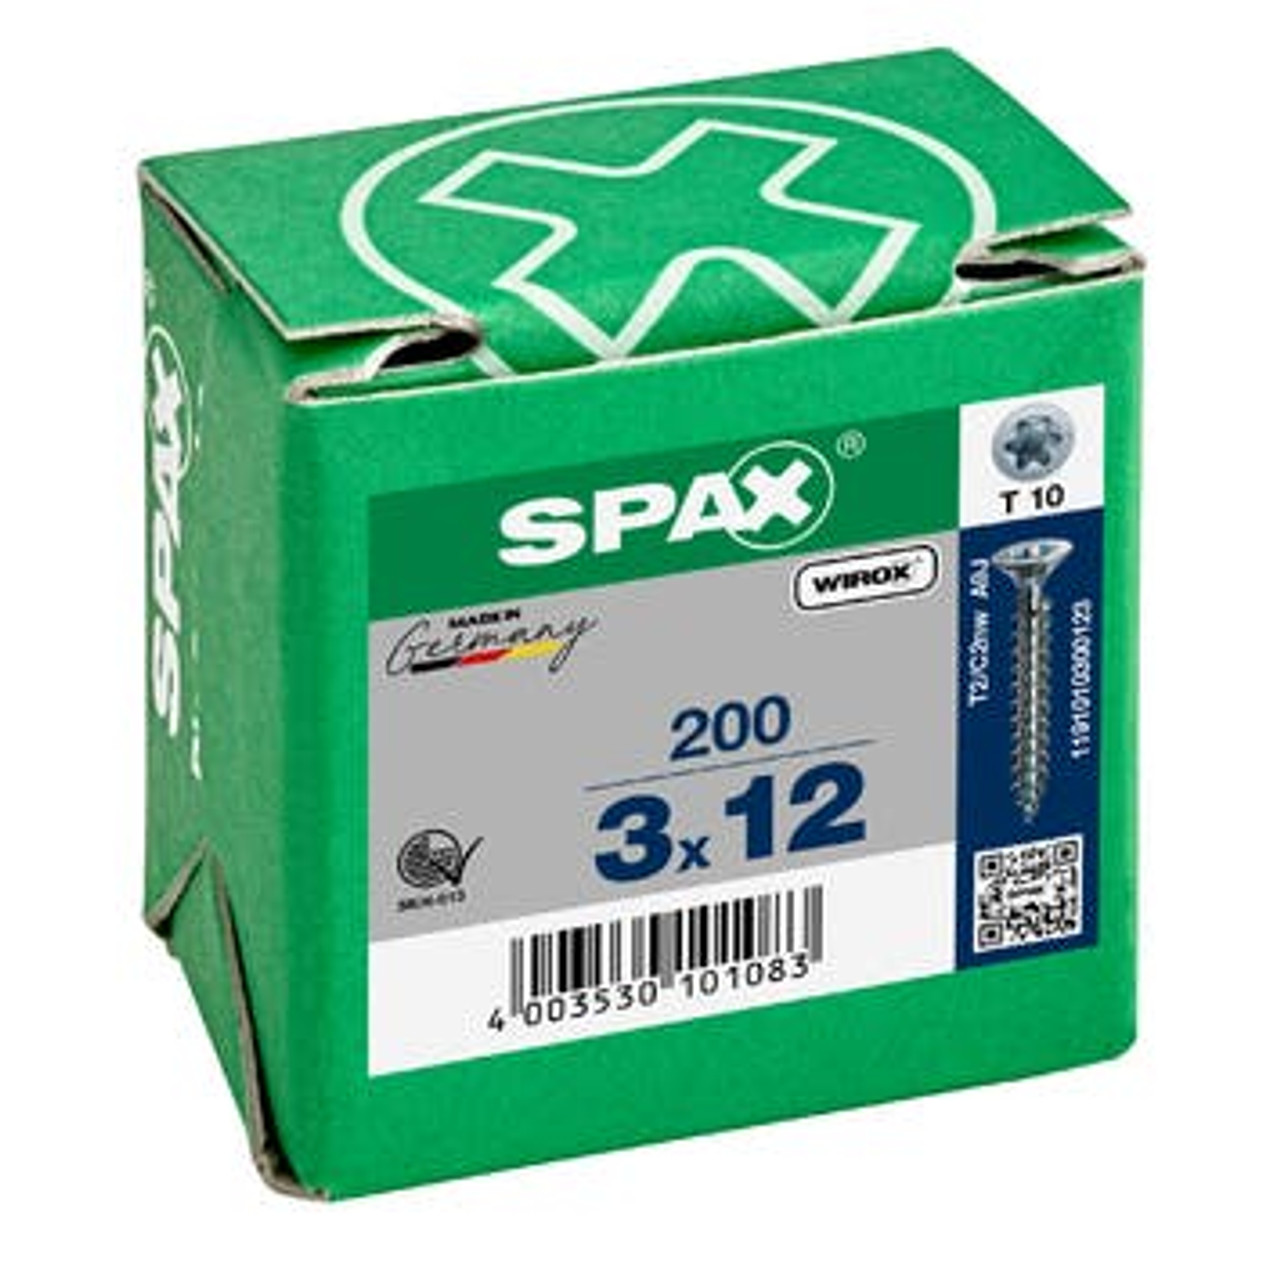 SPAX Screws | 3mm T10 Countersunk Head Screws with Full Thread in WIROX